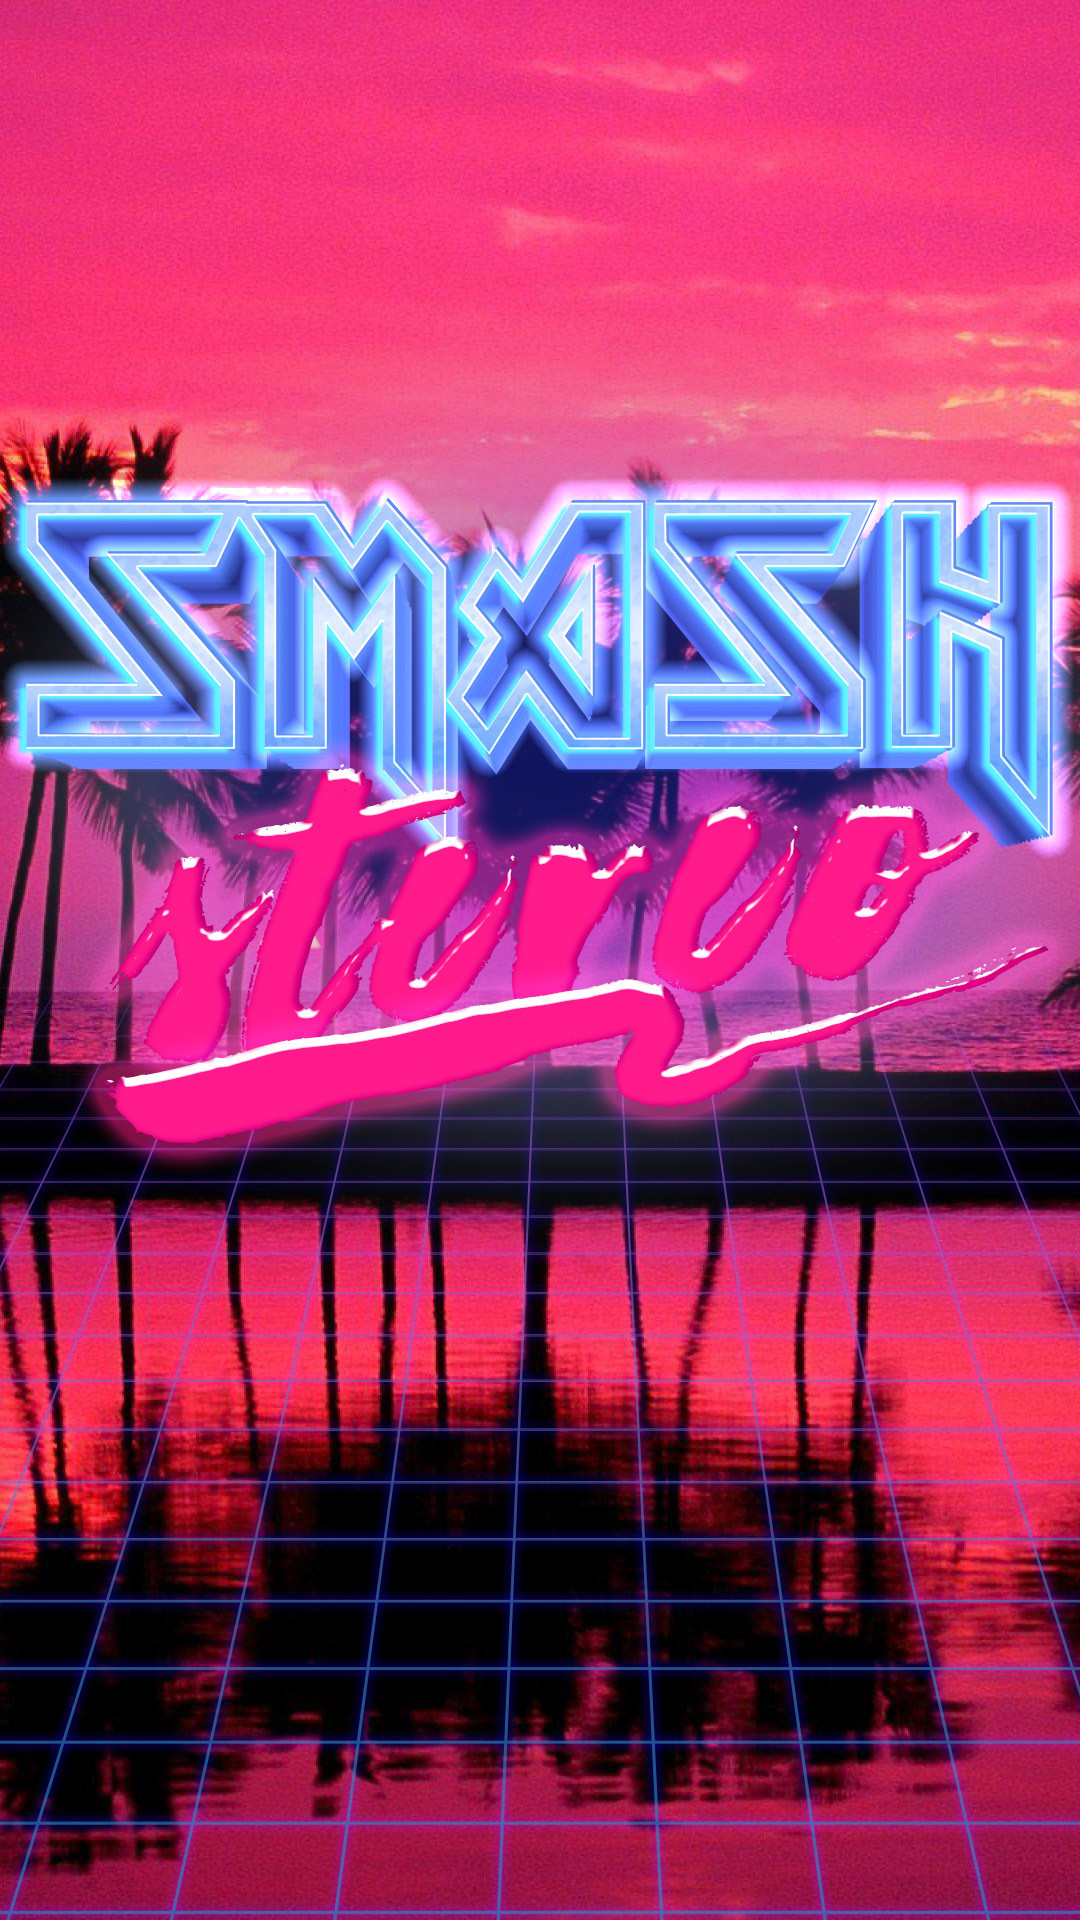 1080x1920 ... SmashStereoGraphics Smash stereo phone wallpaper (80's style) by  SmashStereoGraphics